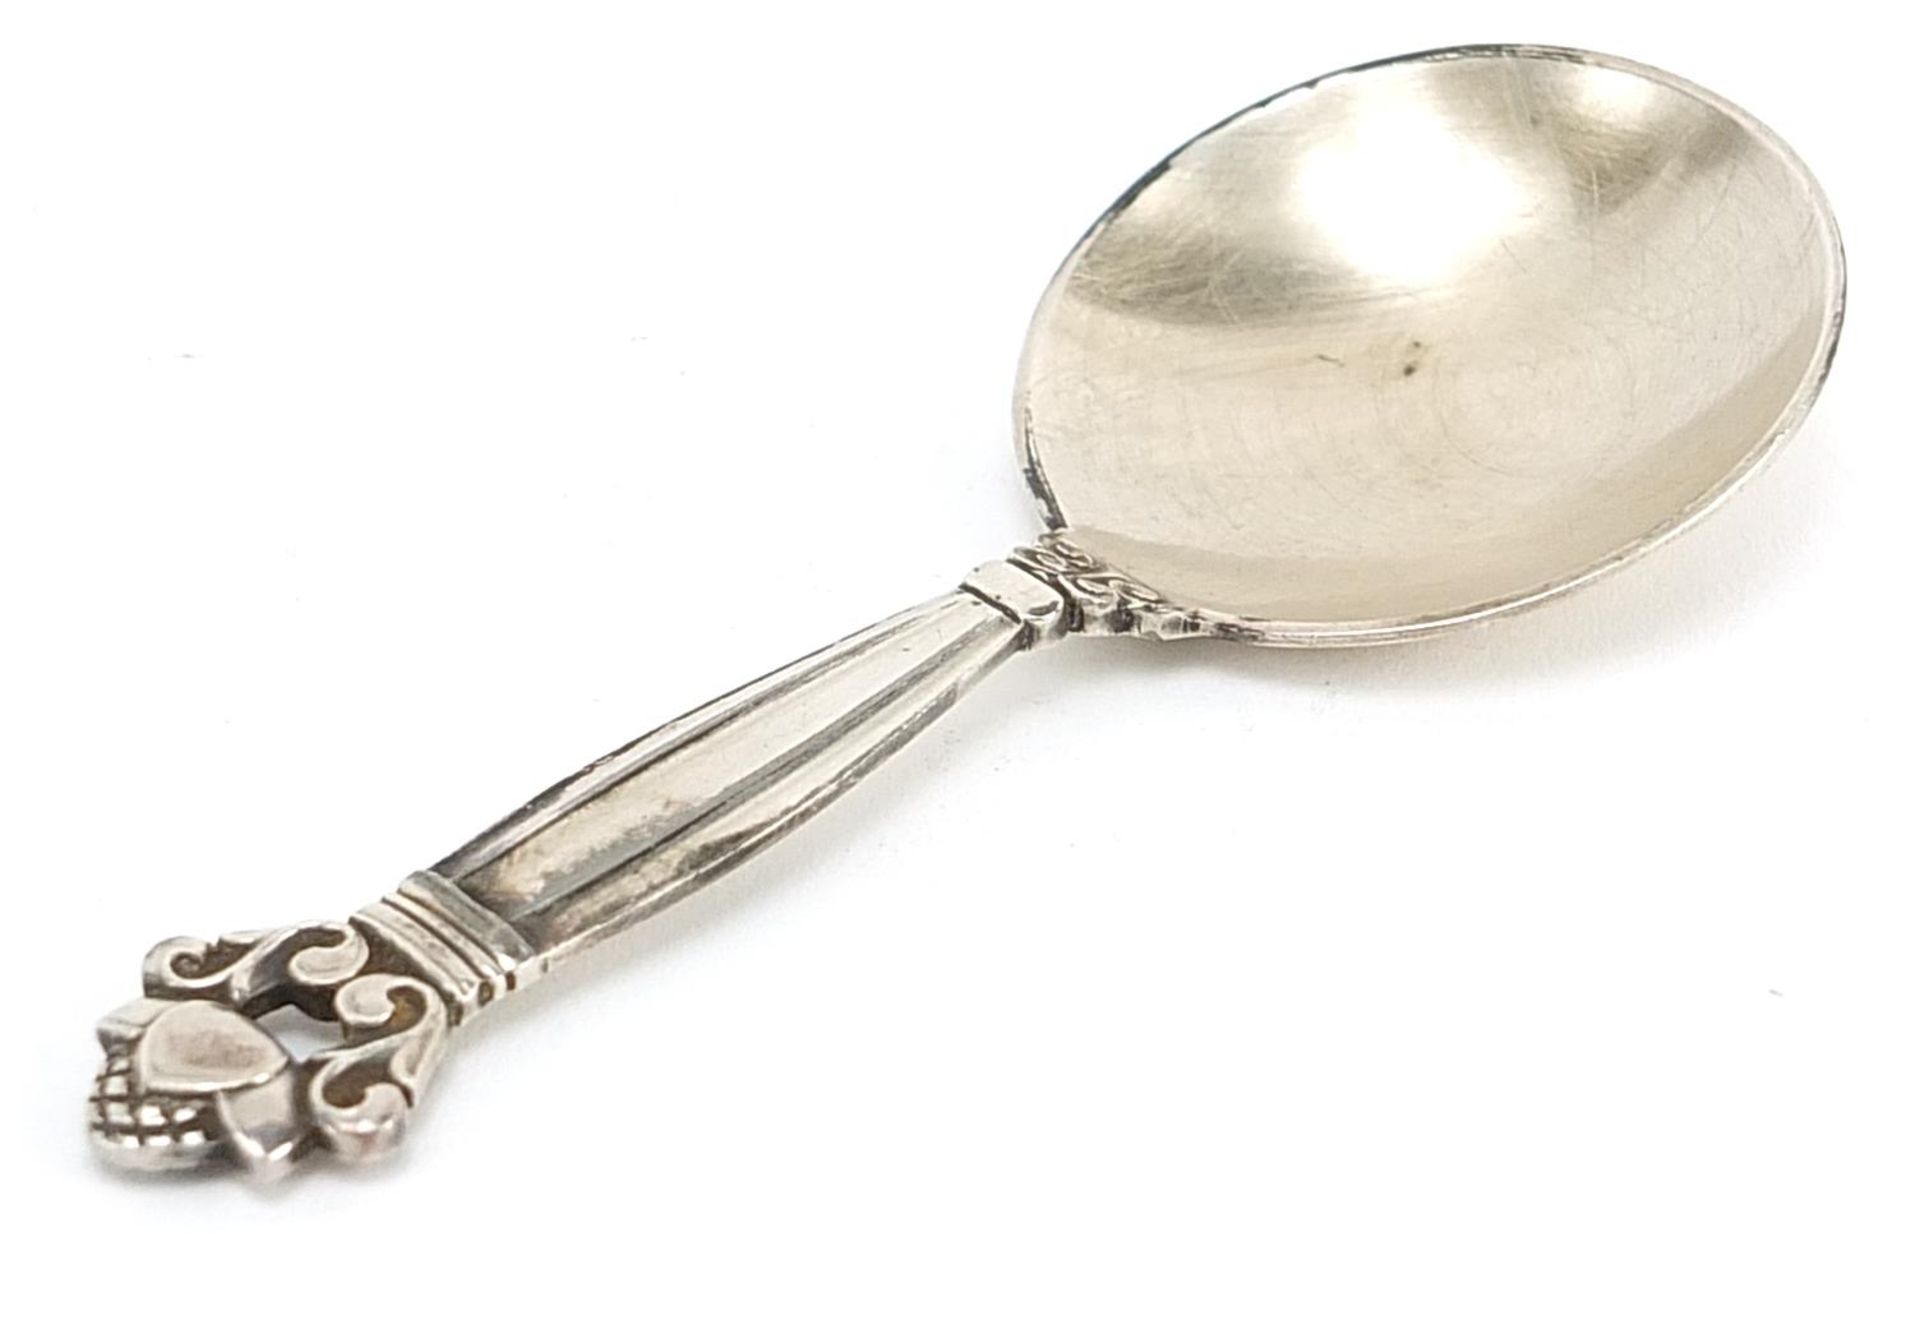 Georg Jensen, Danish silver acorn caddy spoon, London 1948 import marks, 10.5cm in length, 25.2g - Image 2 of 4